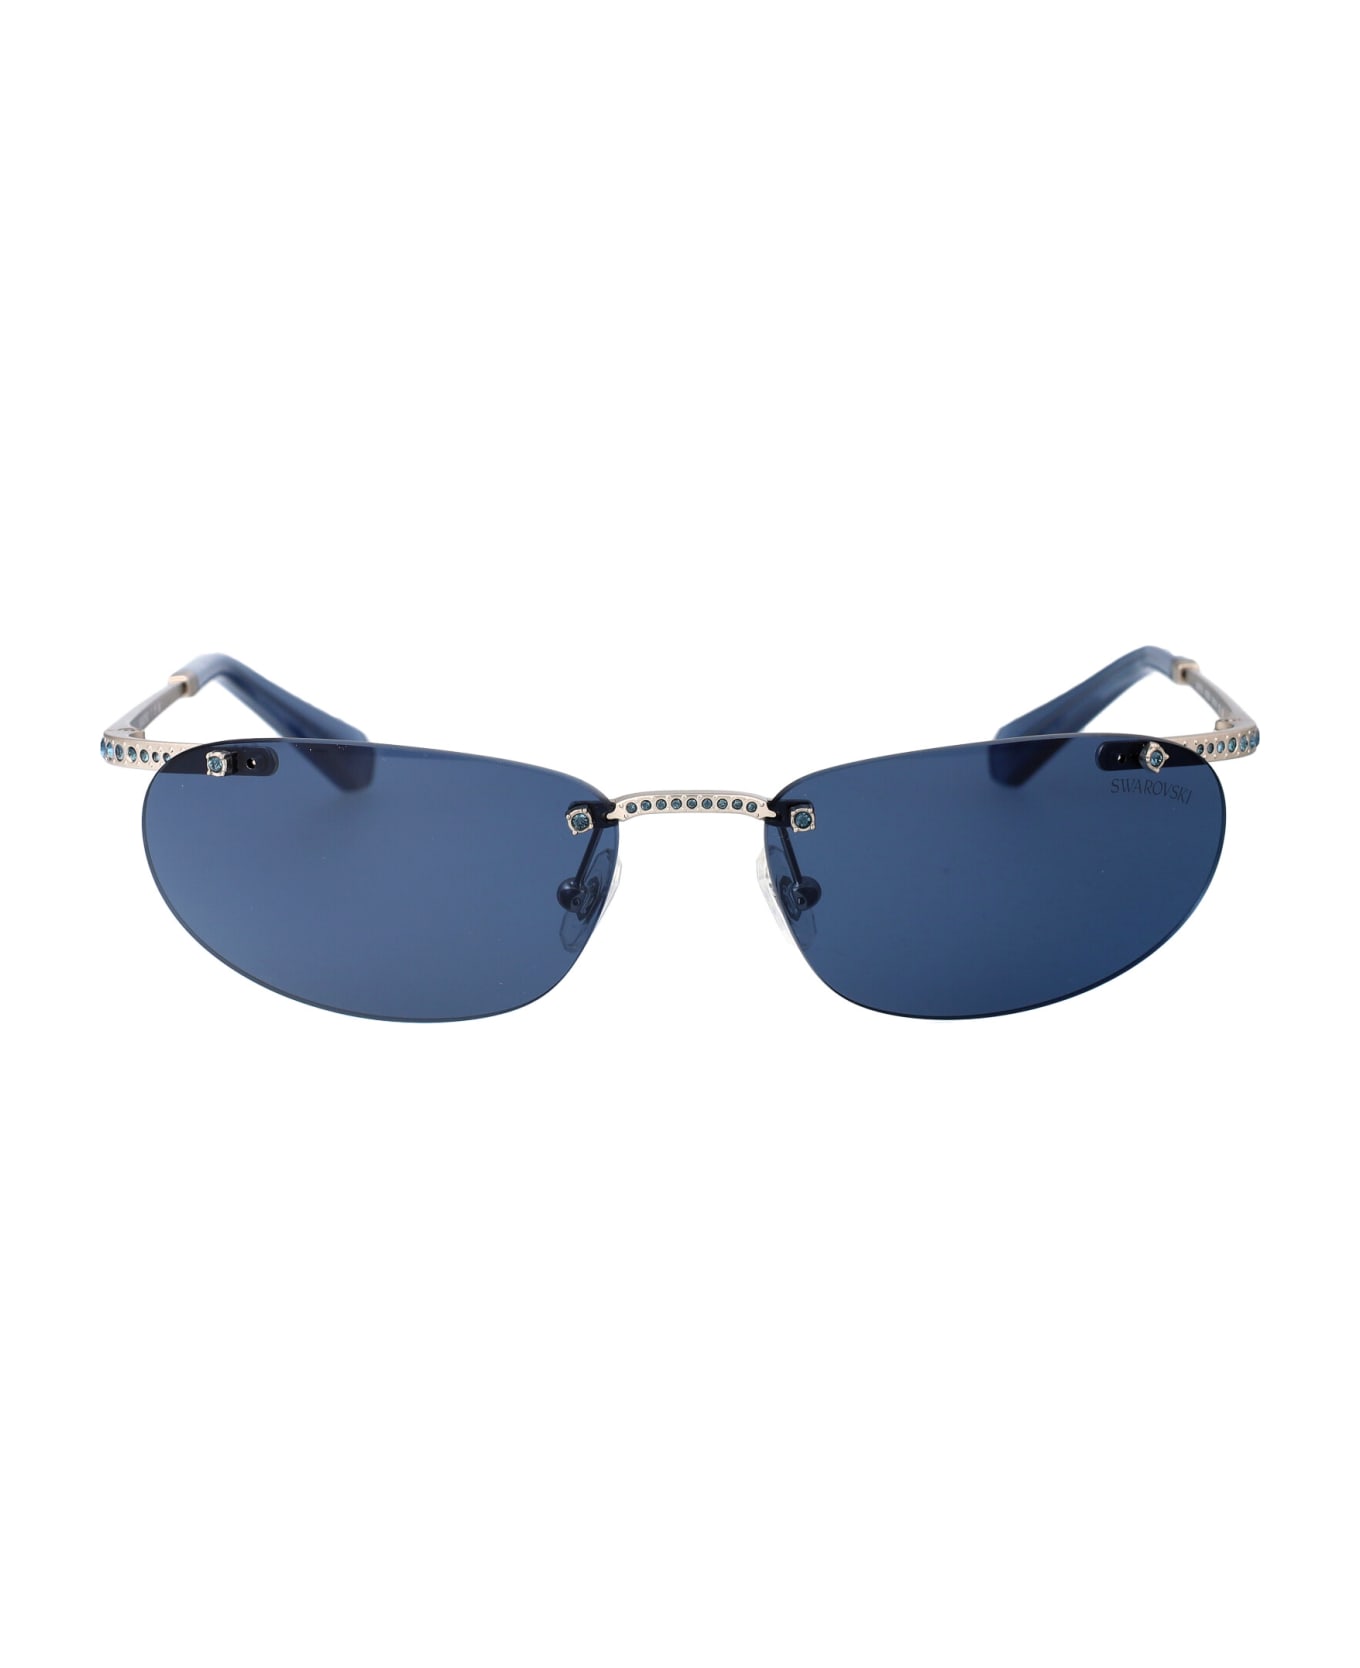 Swarovski 0sk7019 Sunglasses - 402555 Matte Silver